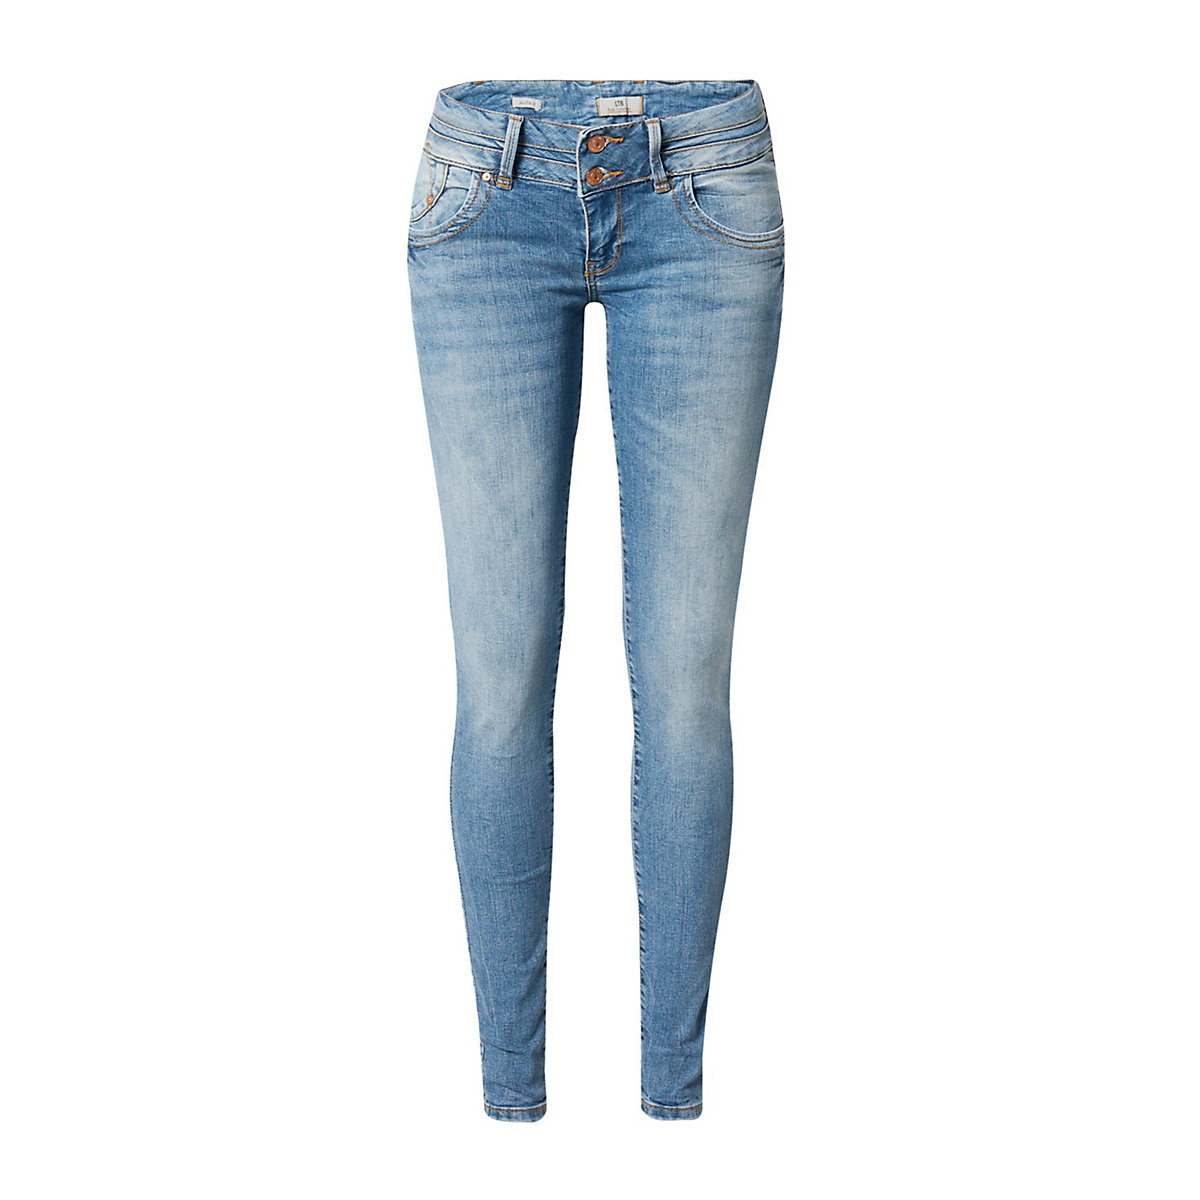 LTB jeans Jeanshosen blue denim